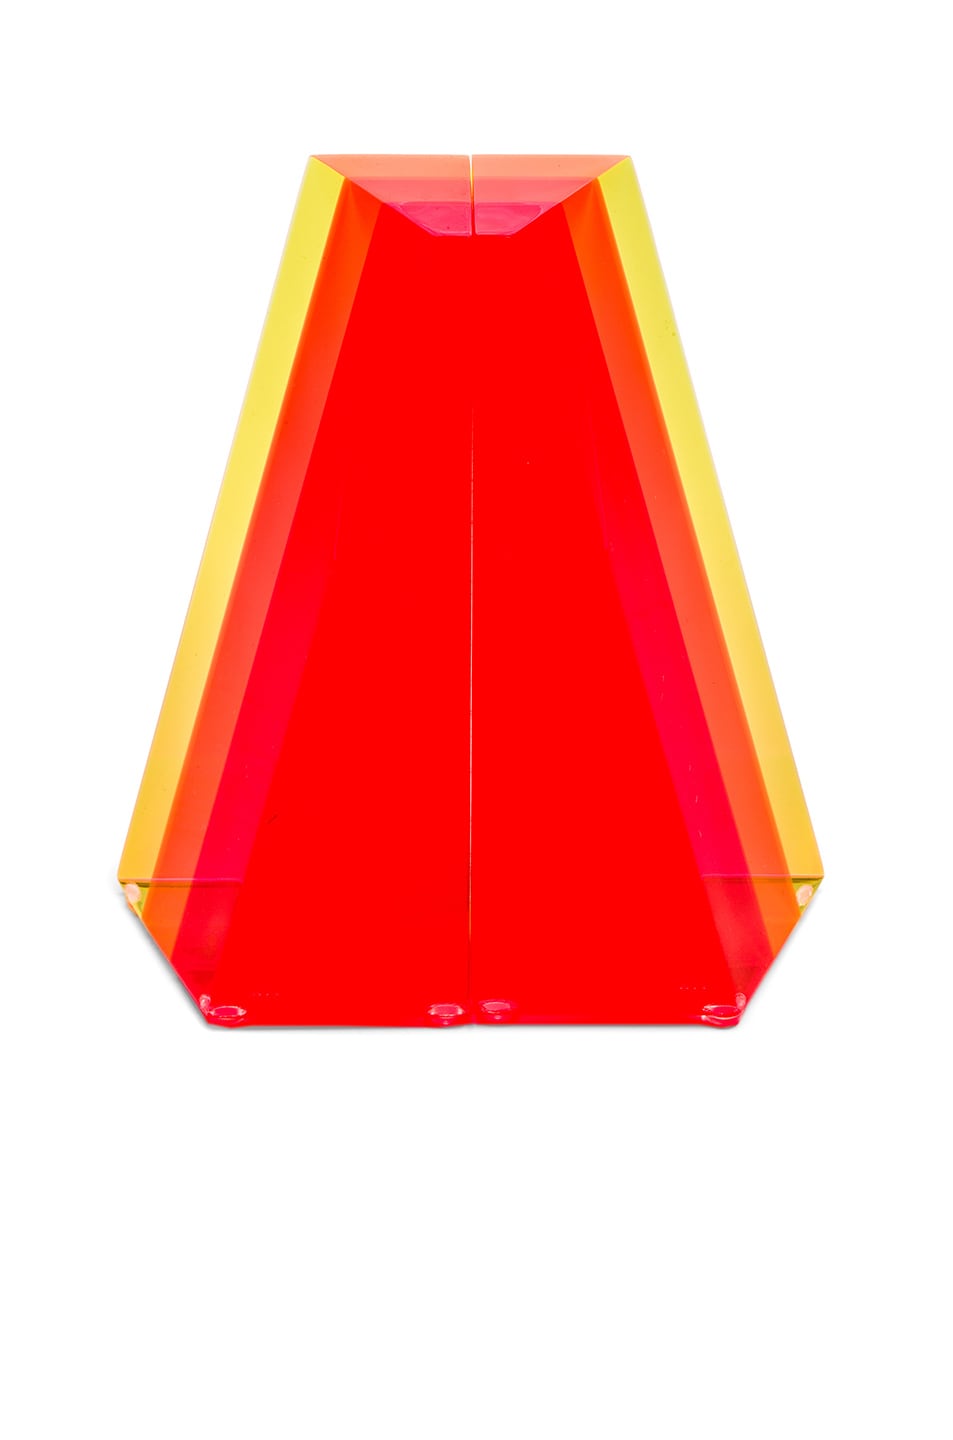 Image 1 of Alexandra Von Furstenberg Fearless Prism Bookends in Sunset